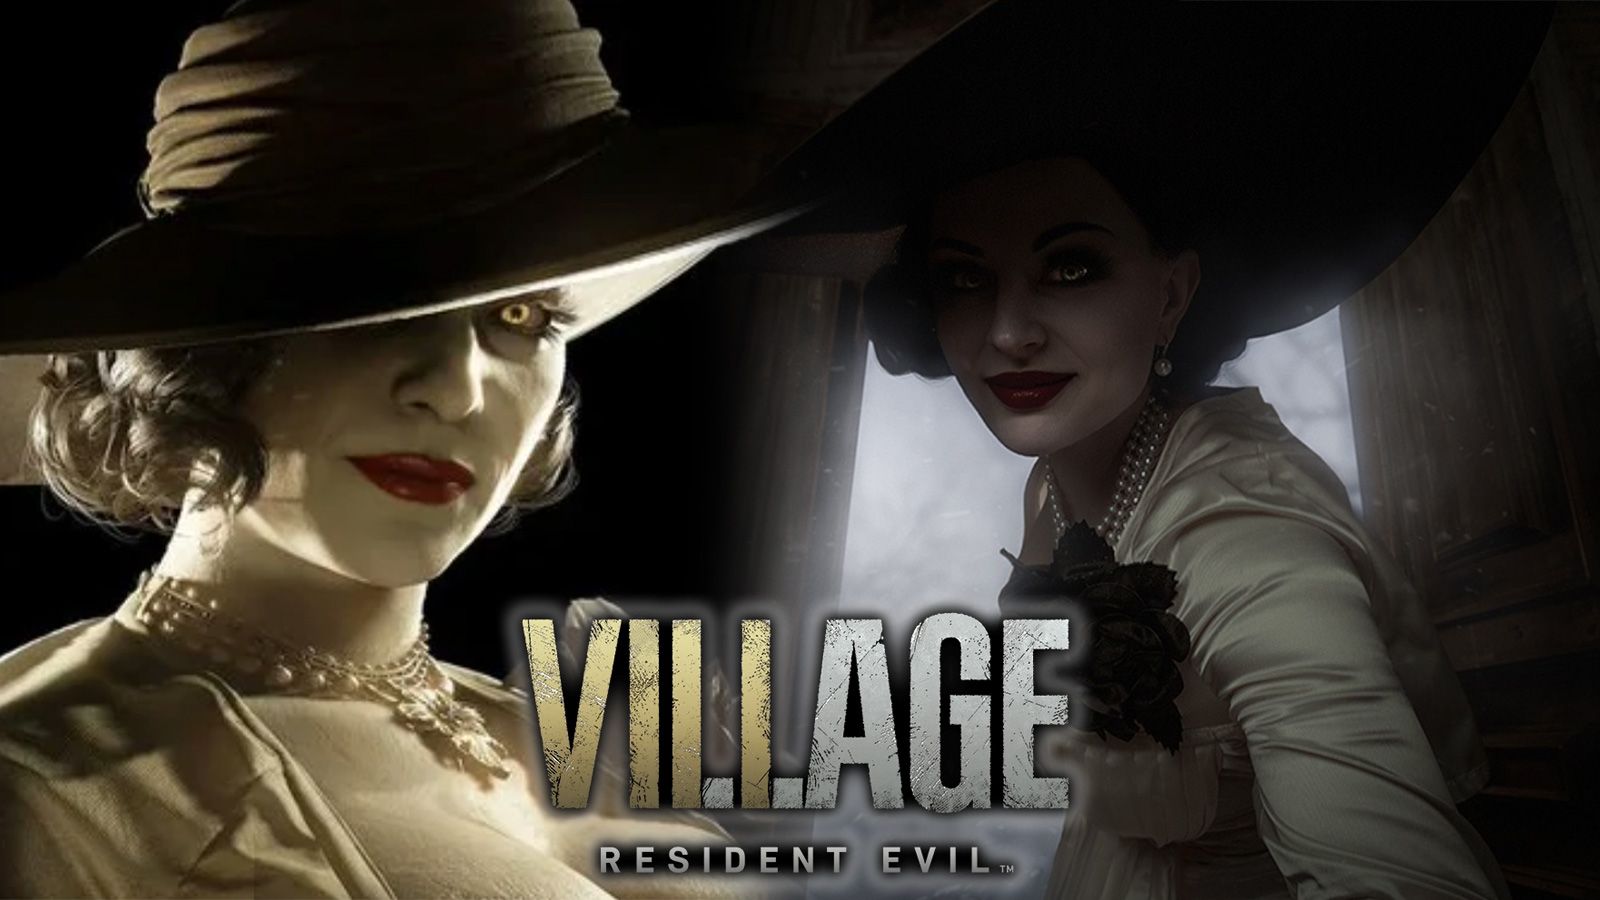 Resident Evil Village cosplayer captivates fans as tall vampire lady Alcina Dimitrescu